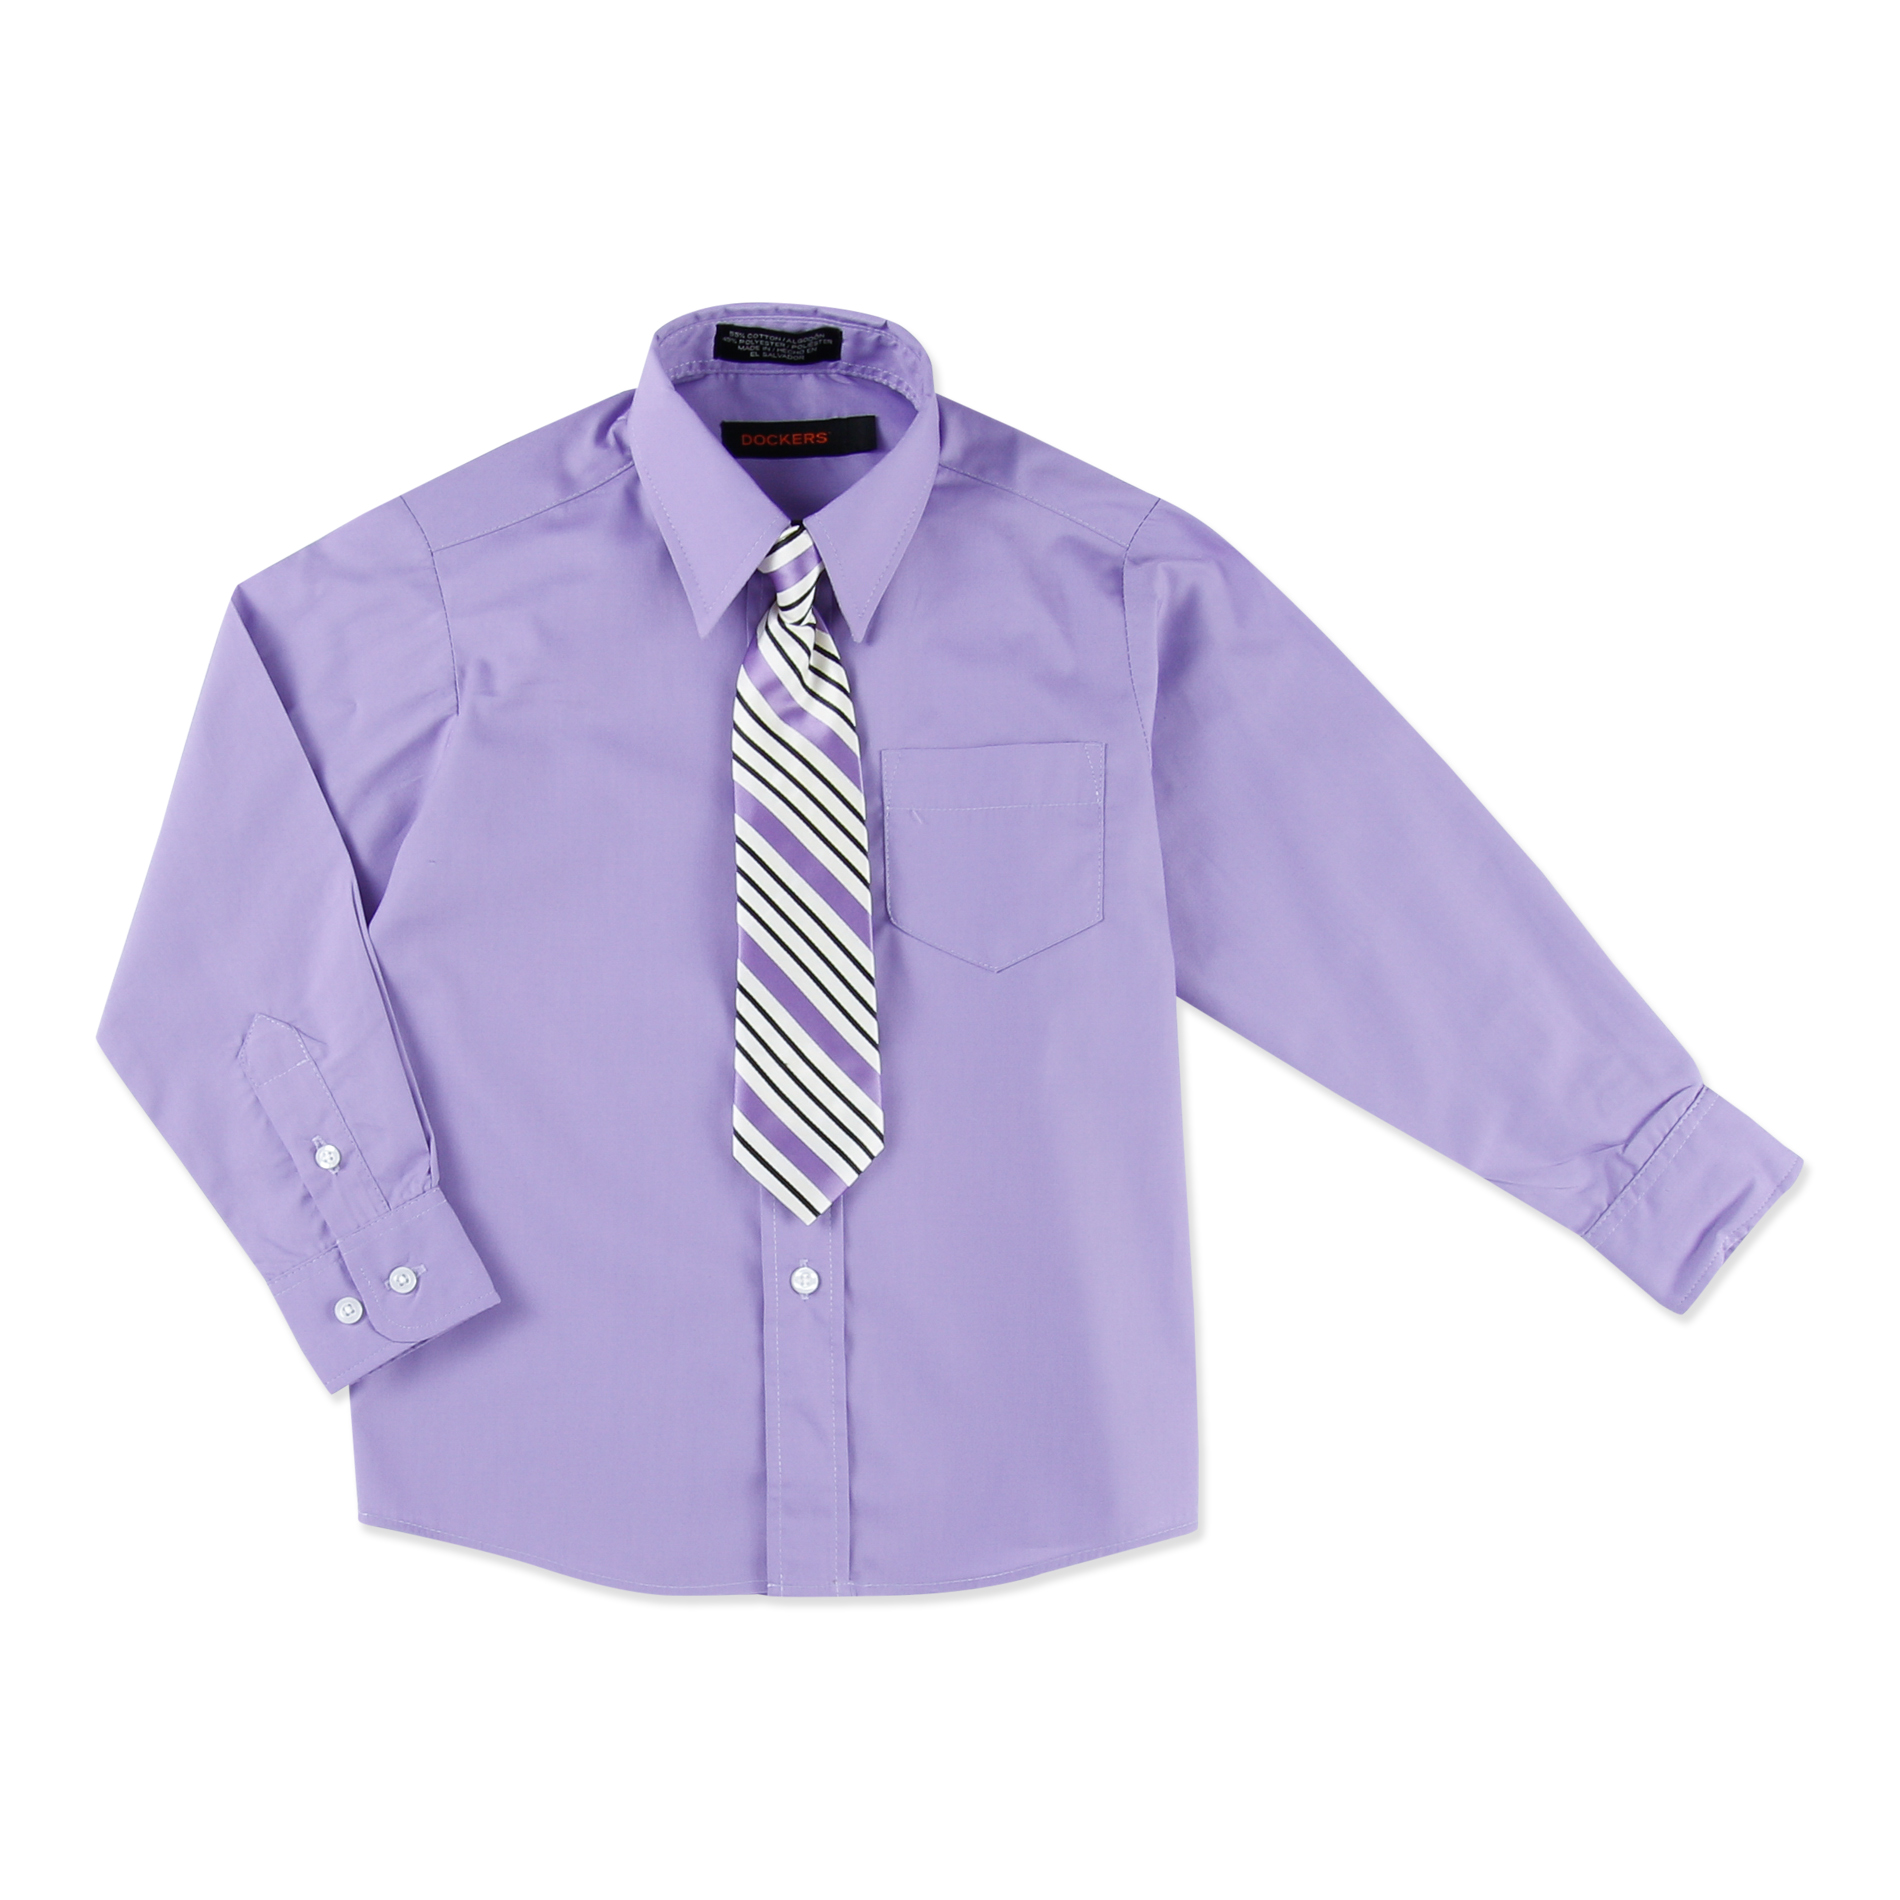 Dockers Boys' Shirt/Tie Set